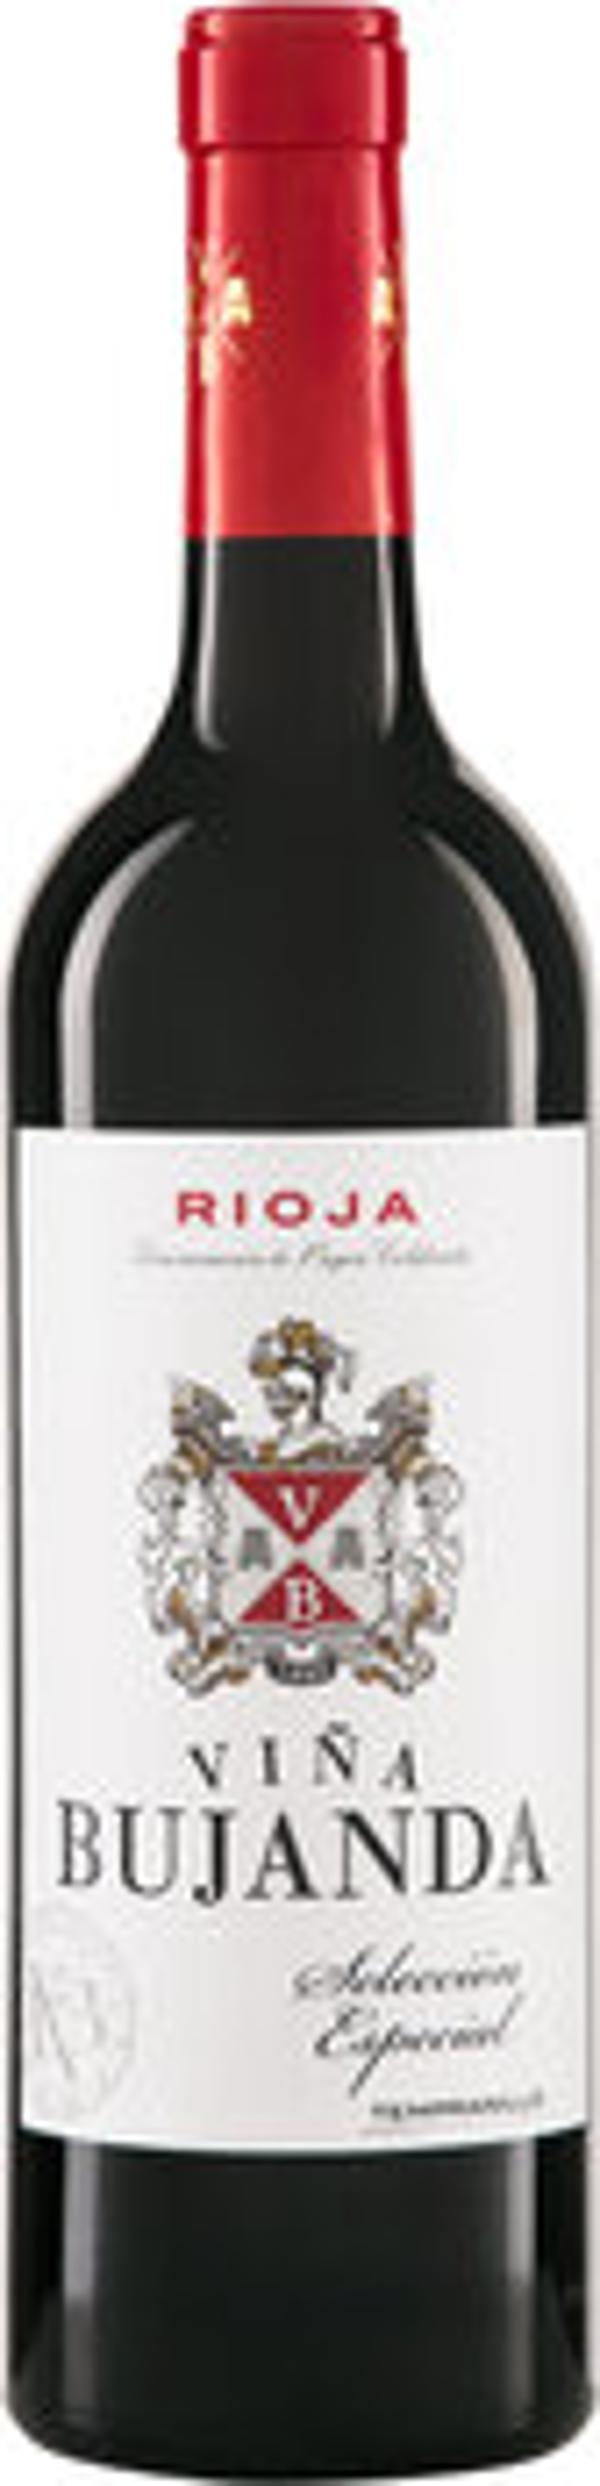 Produktfoto zu Vina Bujanda Tempranillo Rioja